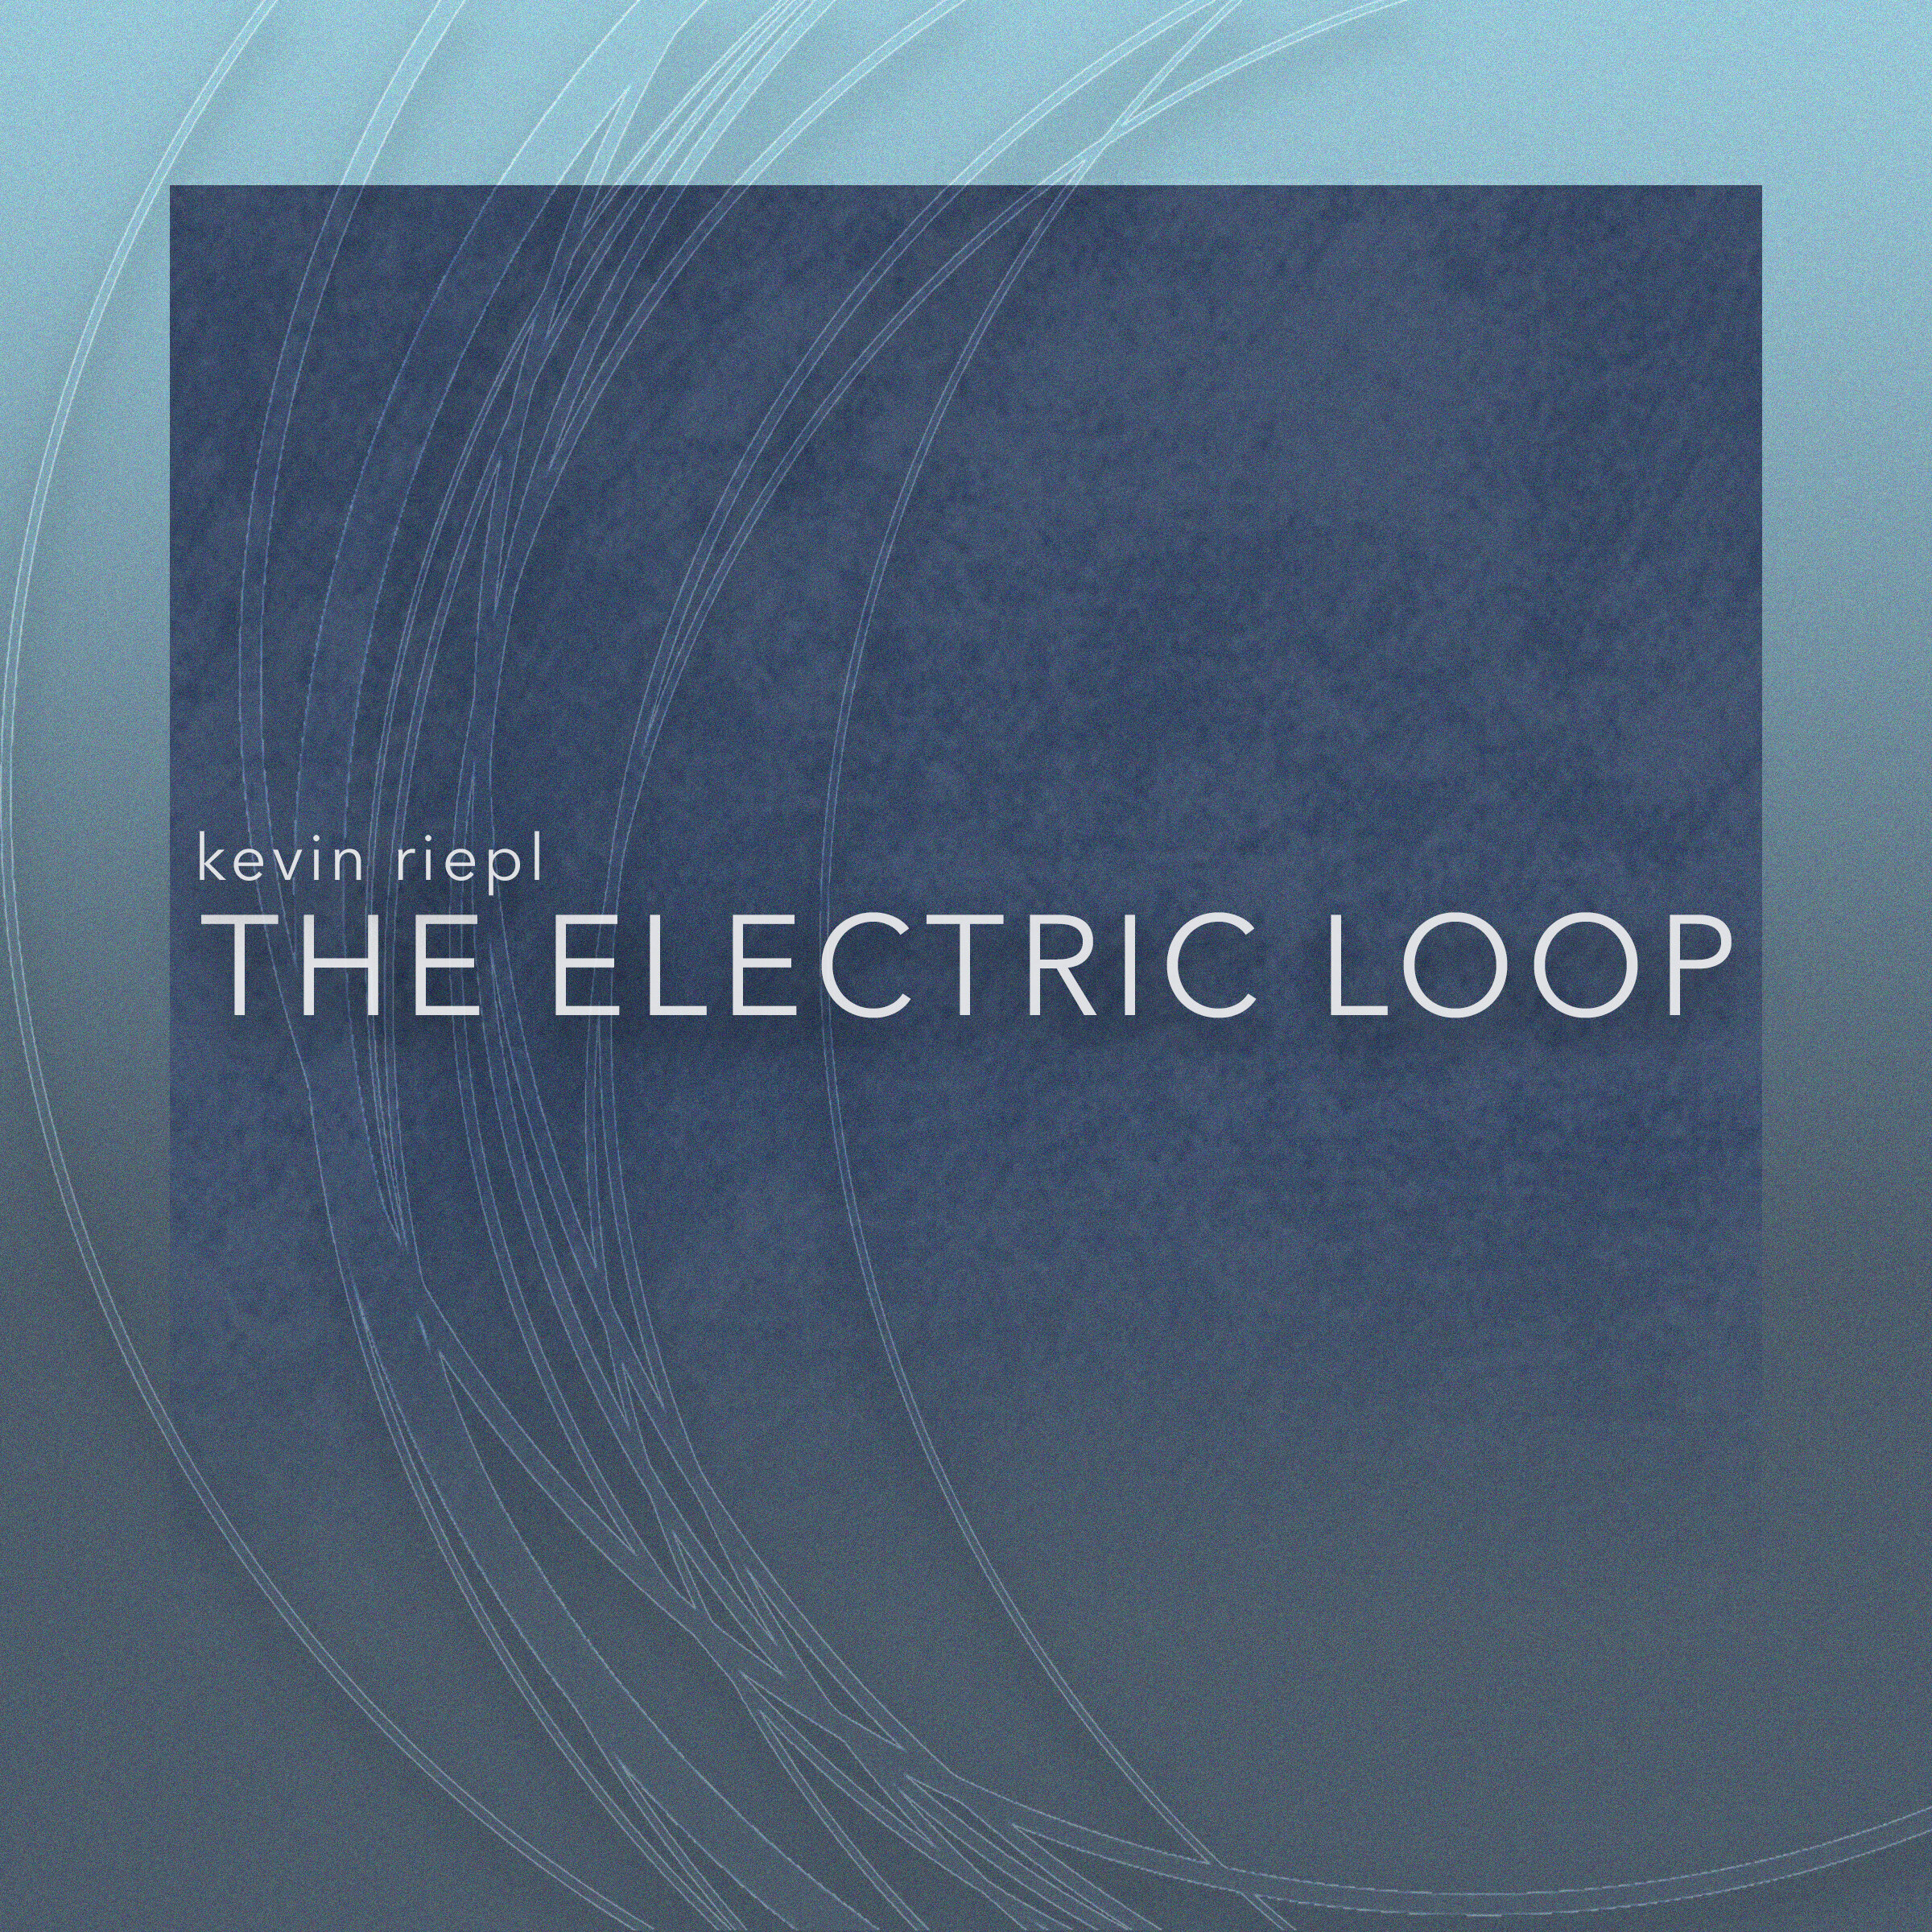 The Electric Loop